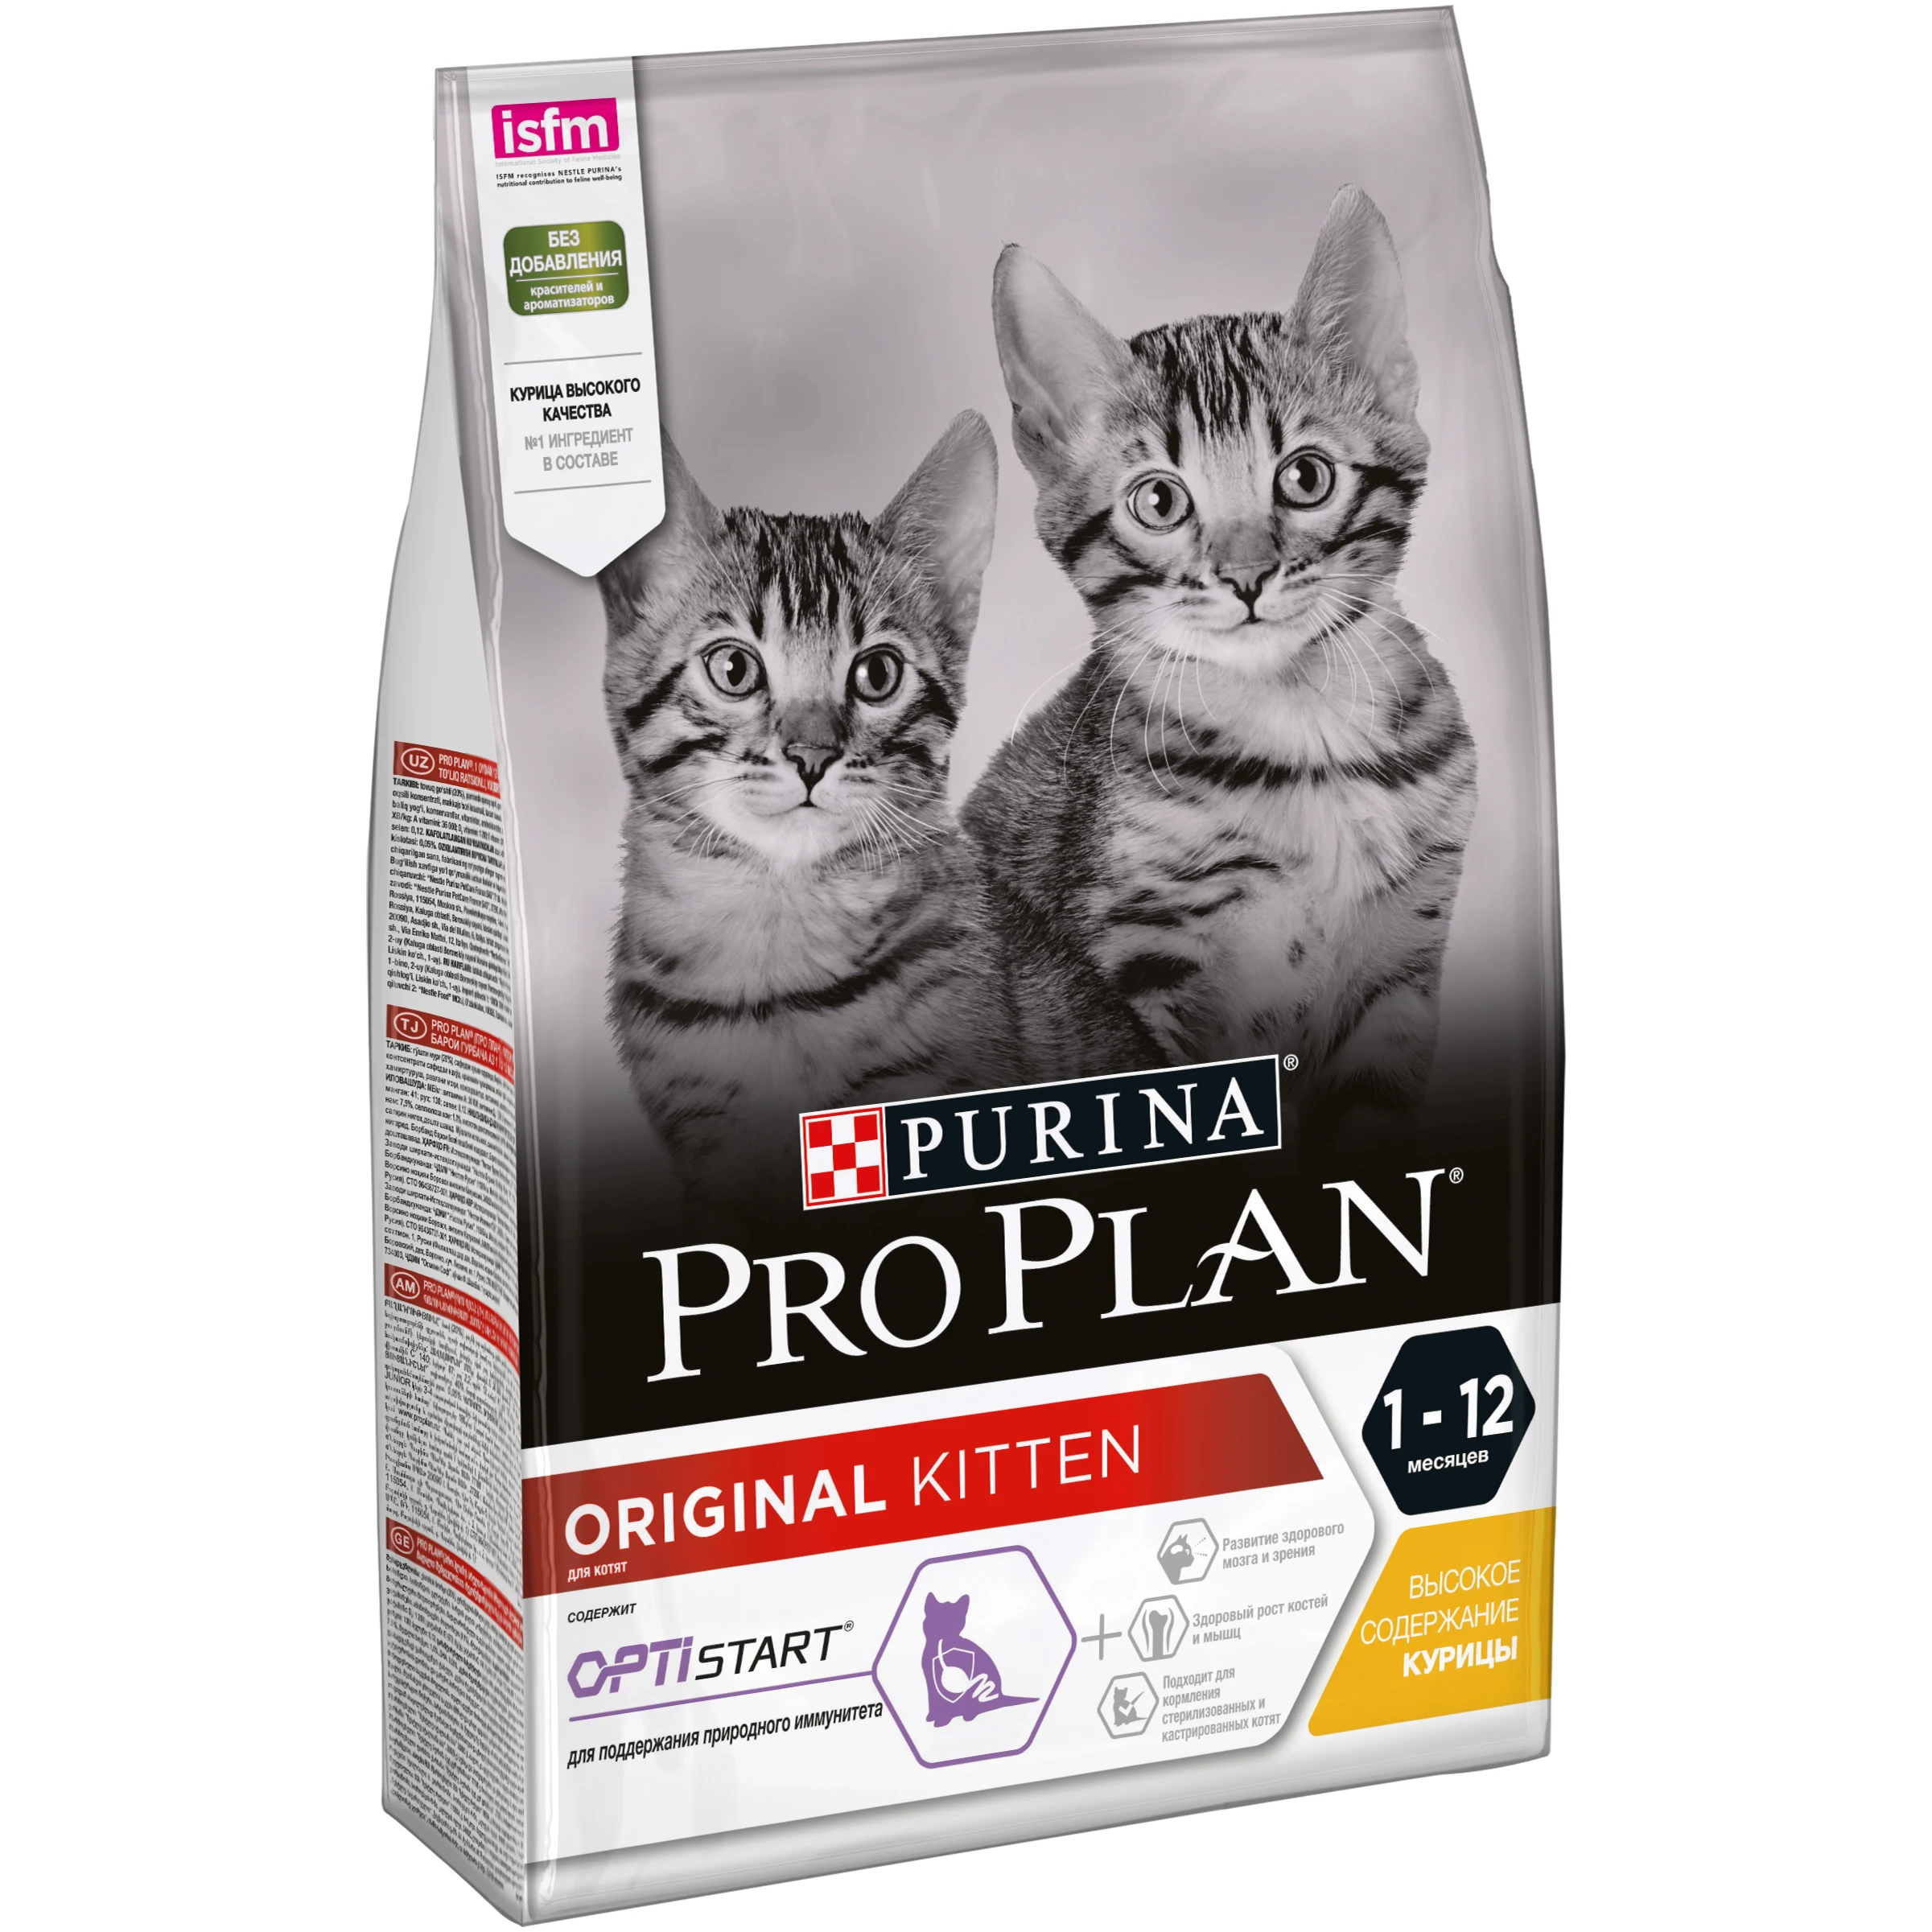 Сухой корм Purina Pro Plan для котят от 1 до 12 месяцев, с курицей, Пакет, 3 кг